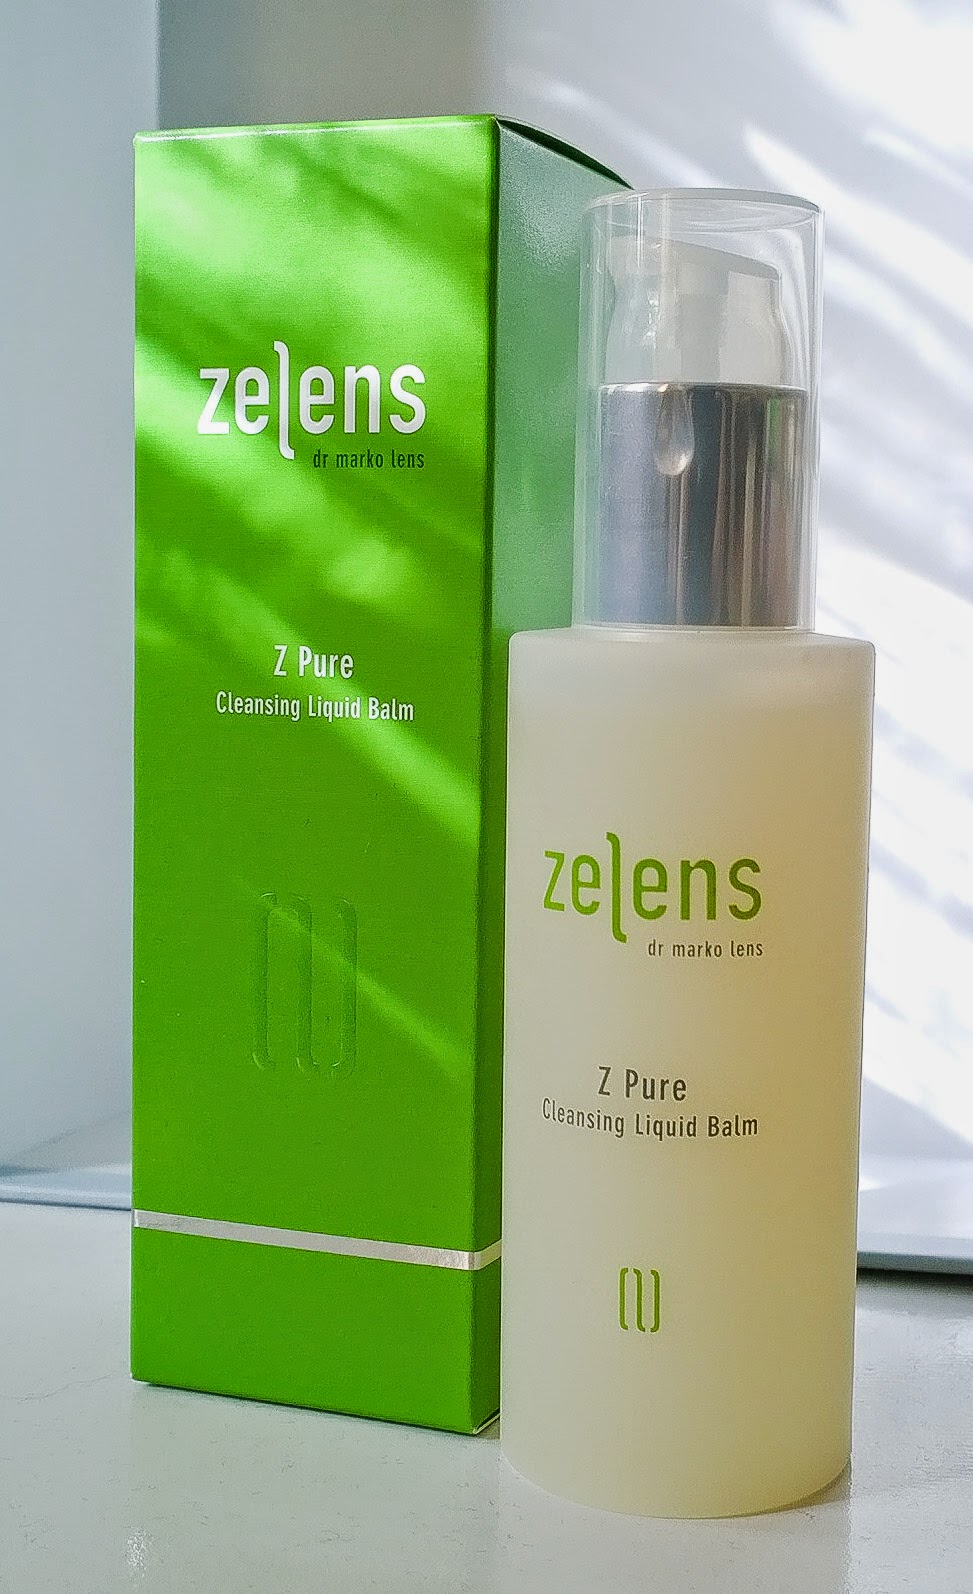 Zelens Z Pure Cleansing Liquid Balm